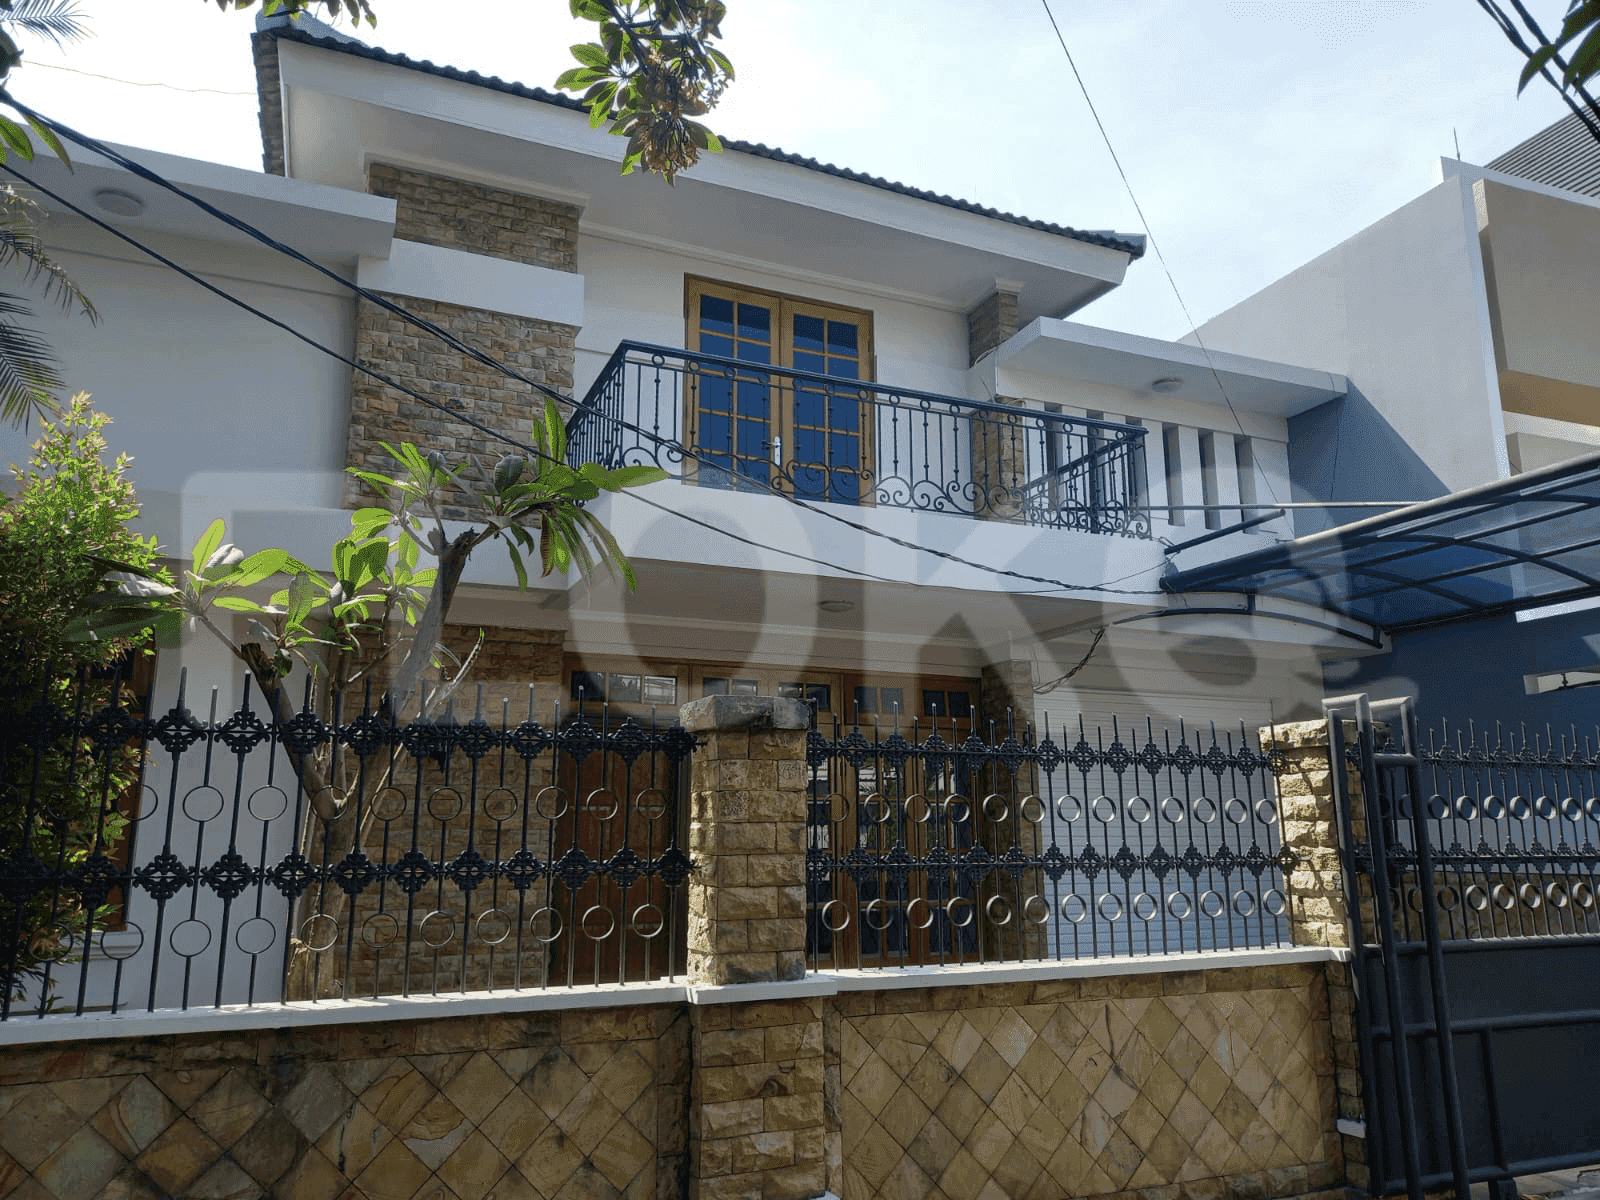 350 sqm, 5 BR house for rent in Pondok Indah 1